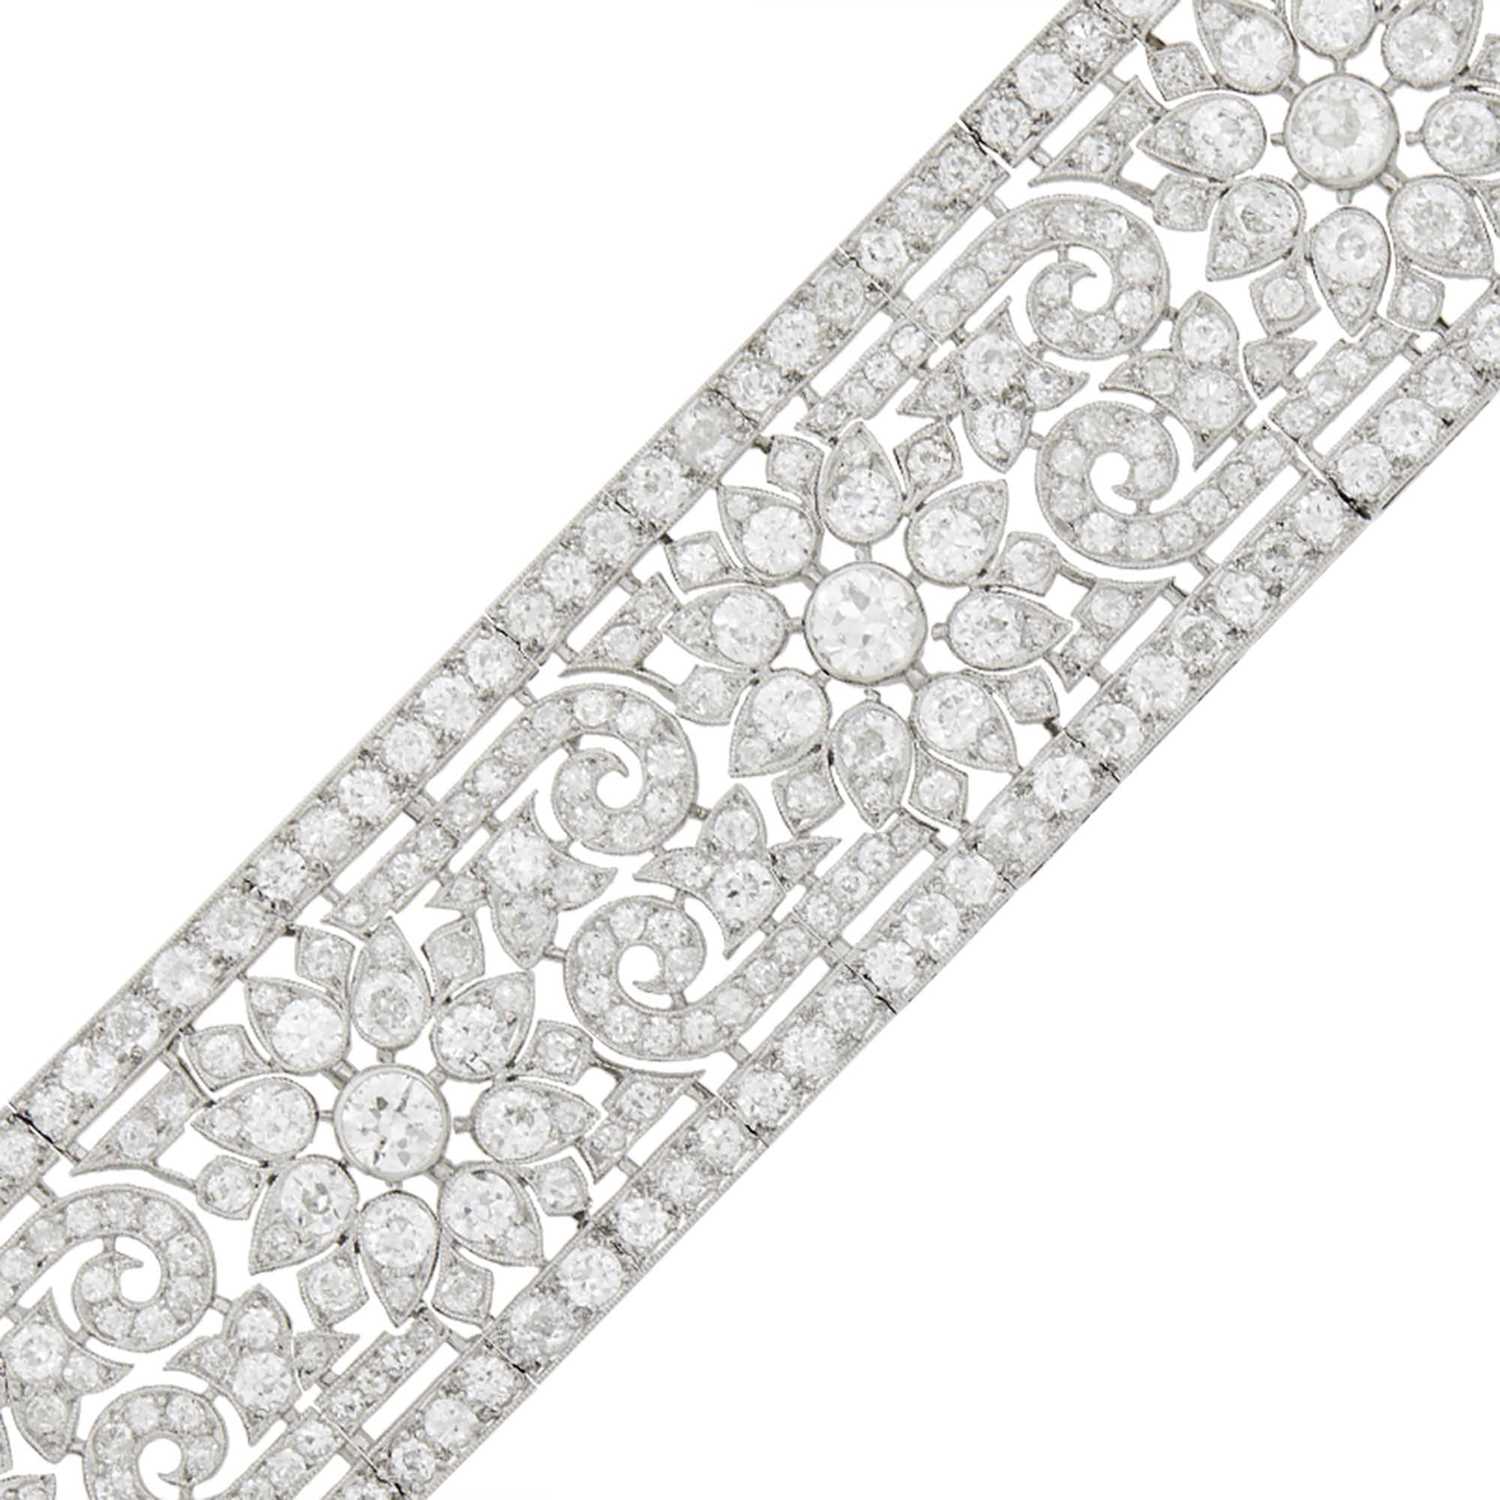 Lot 161 - Wide Platinum and Diamond Bracelet